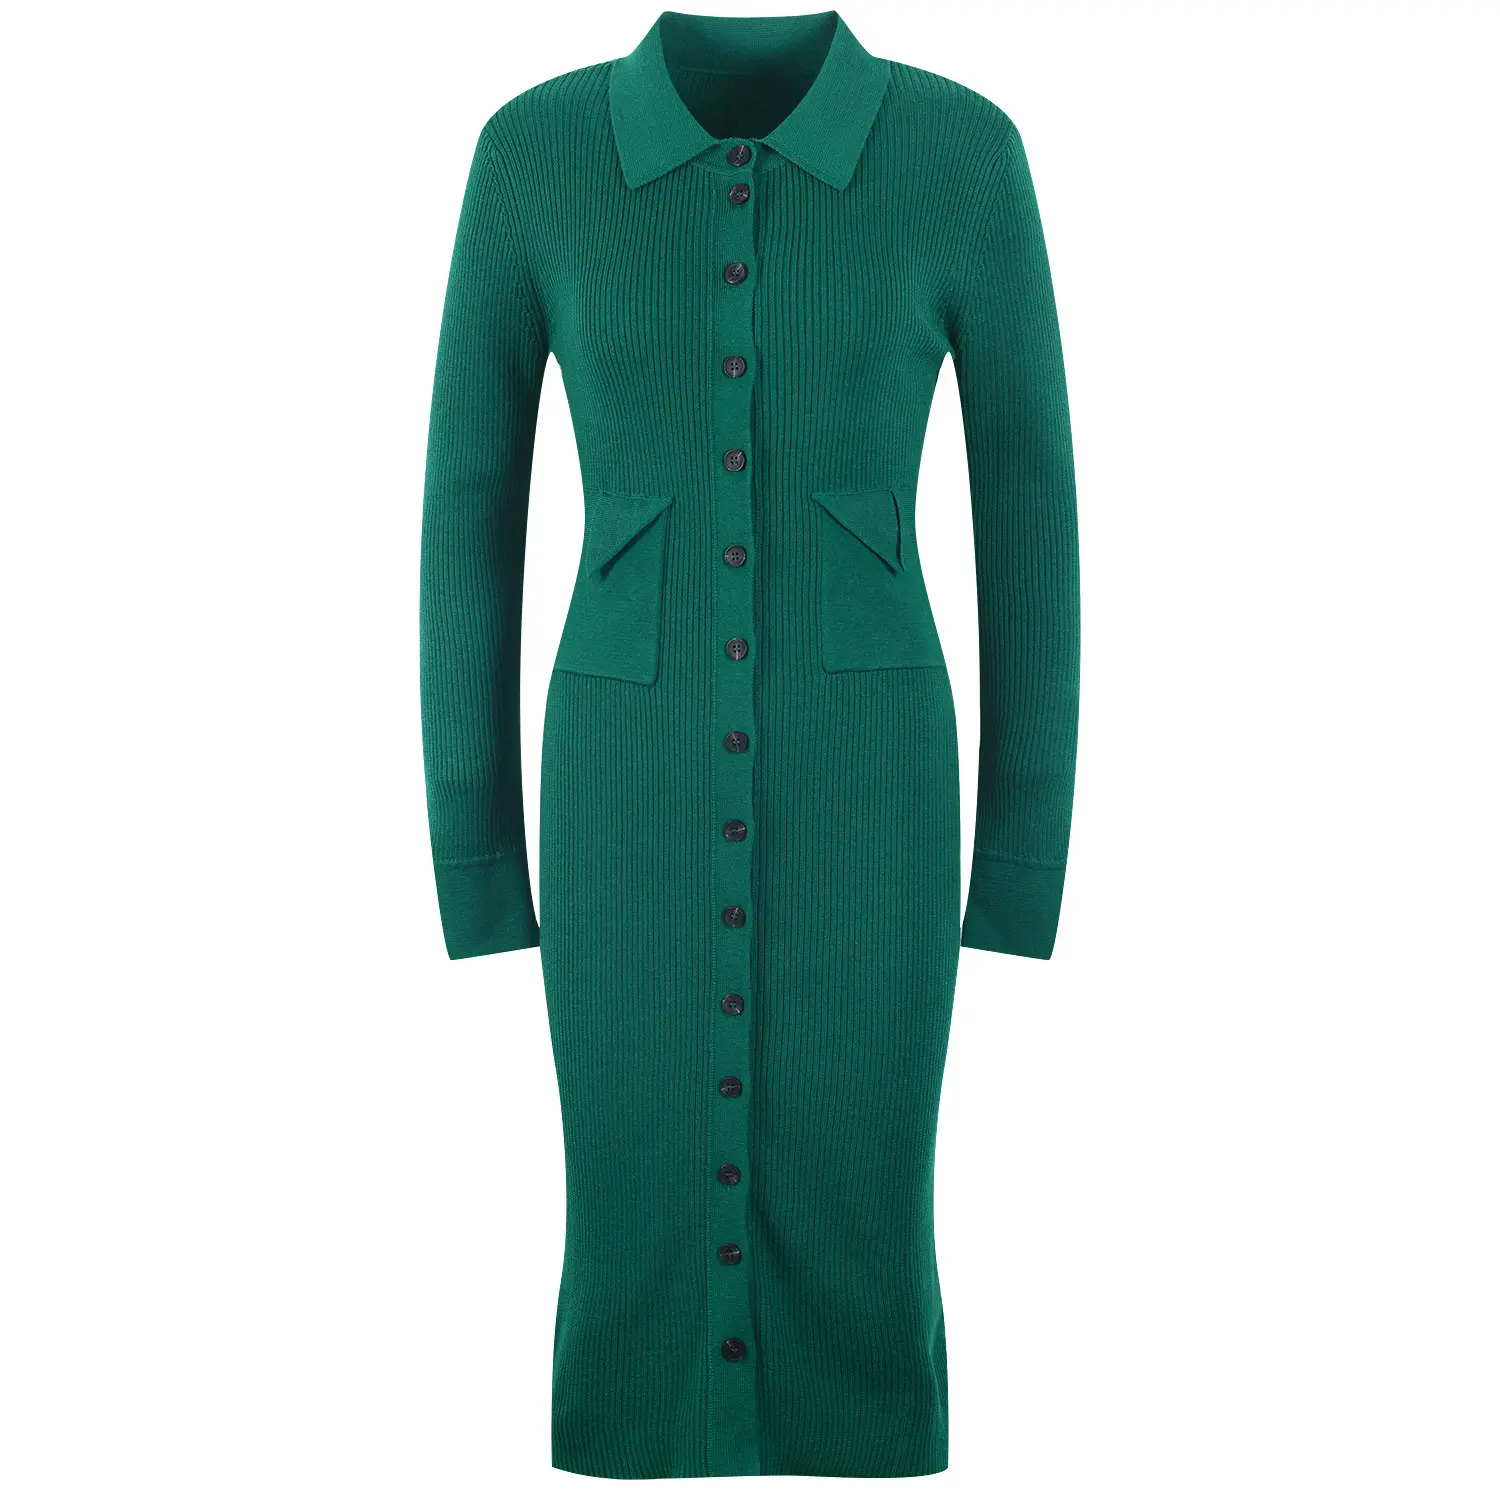 New 3 Colors Black/Khaki/Green Wool Blend Women Sheath Cotton Knit Wear Dress